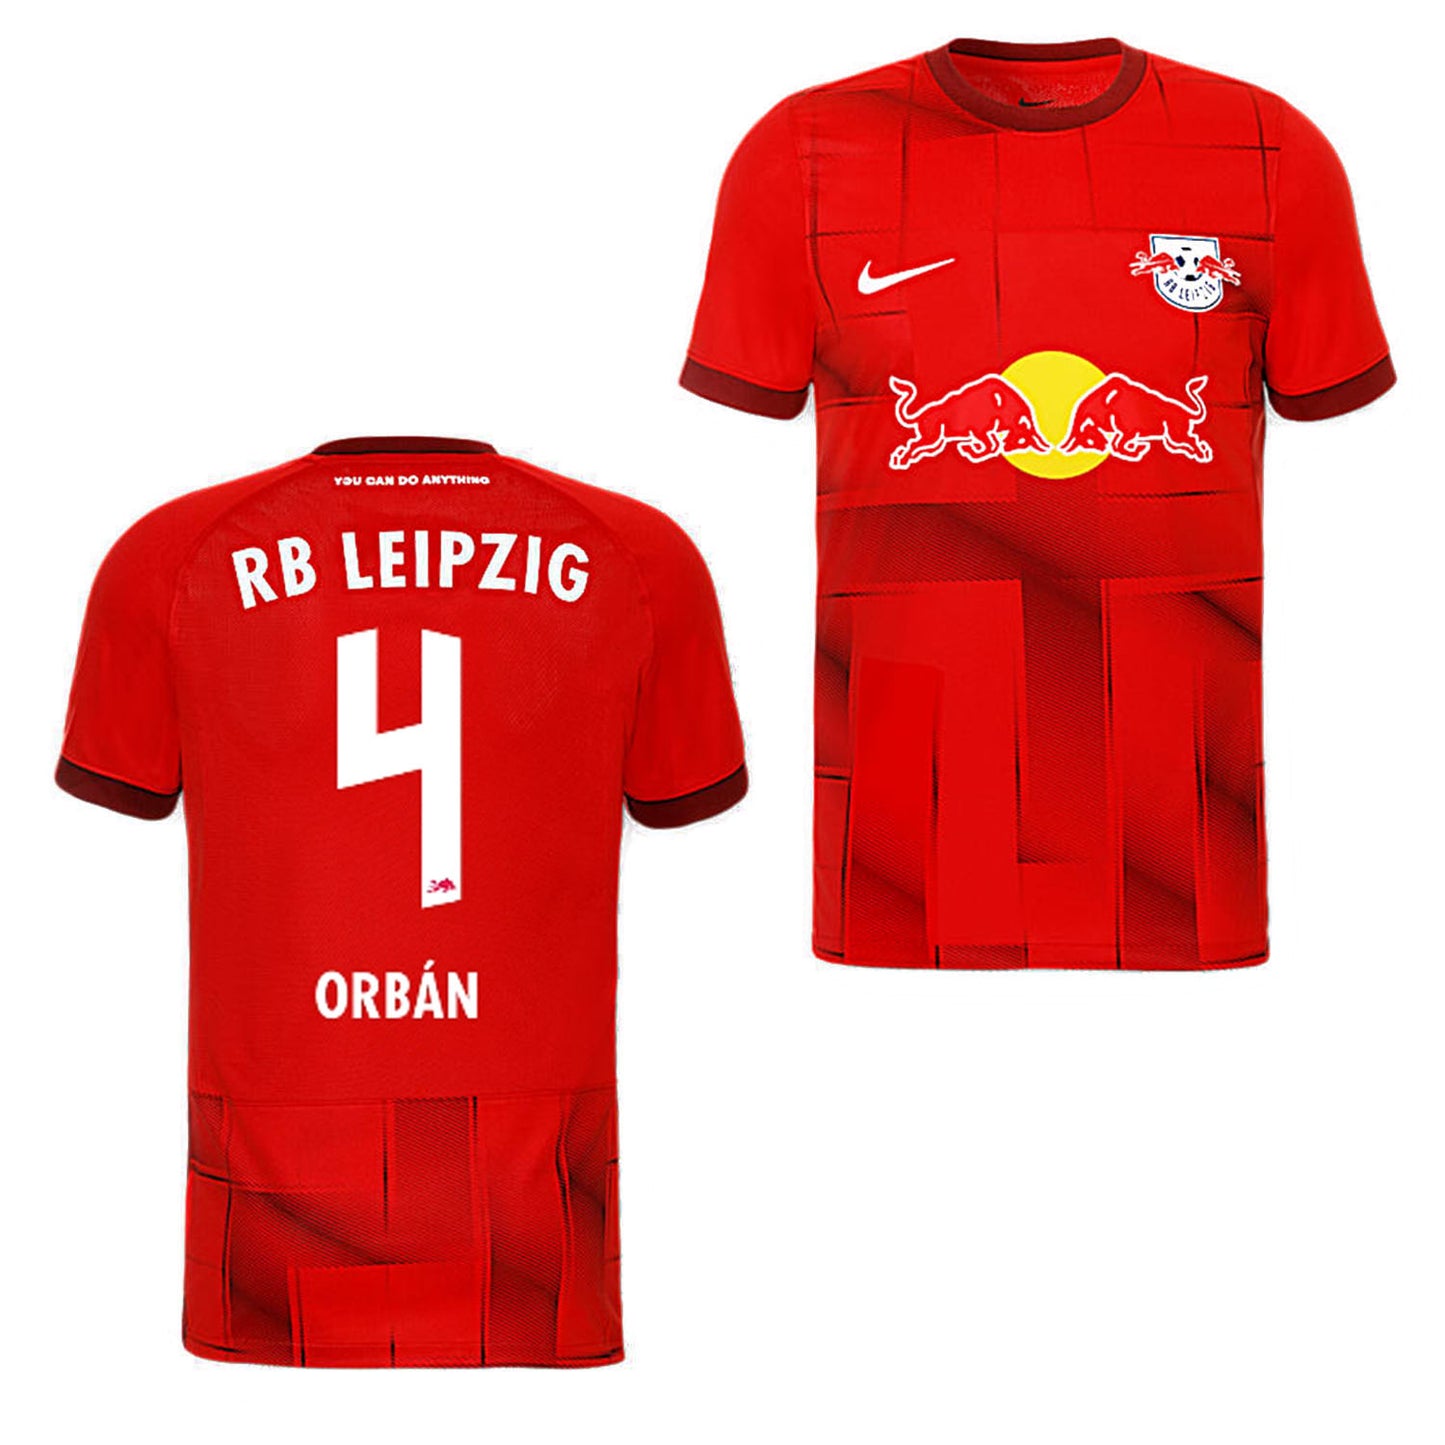 Willi Orban RB Leipzig 4 Jersey